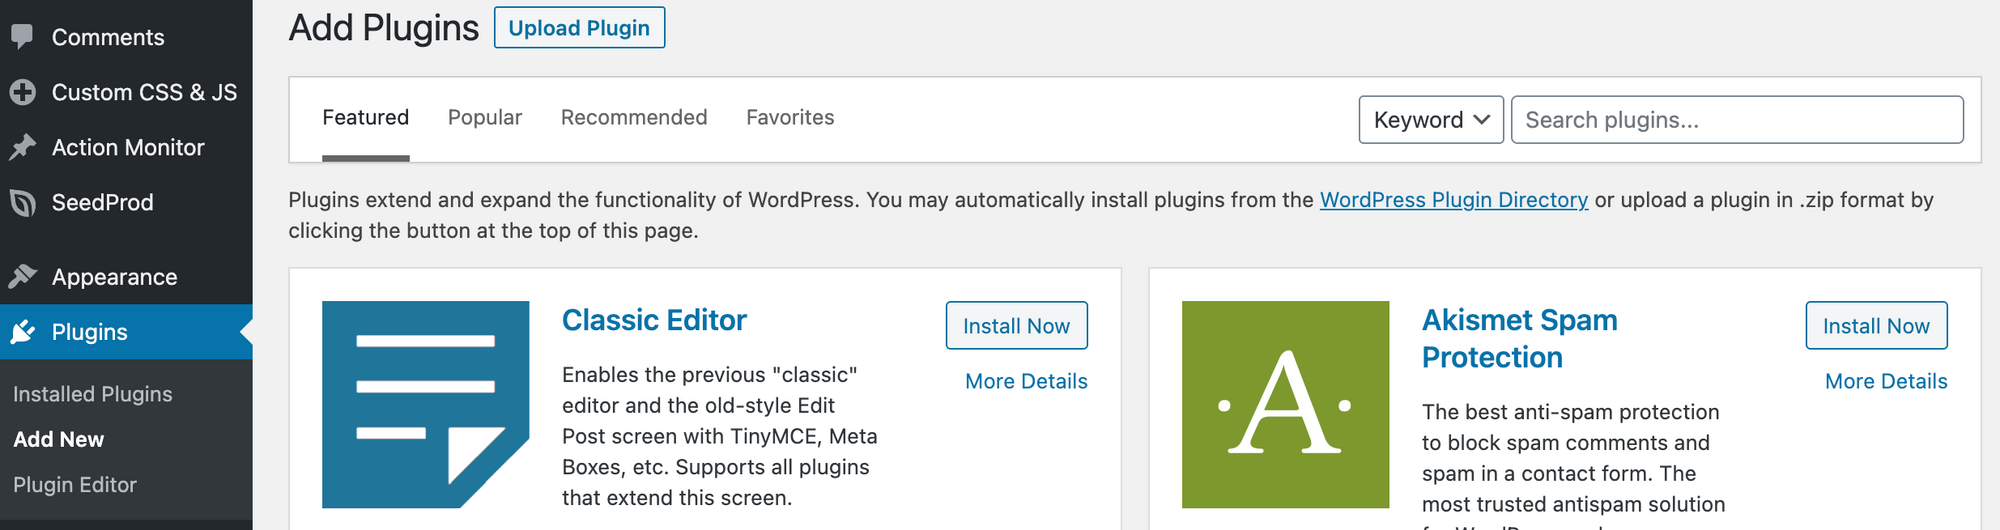 Add plugins to Wordpress